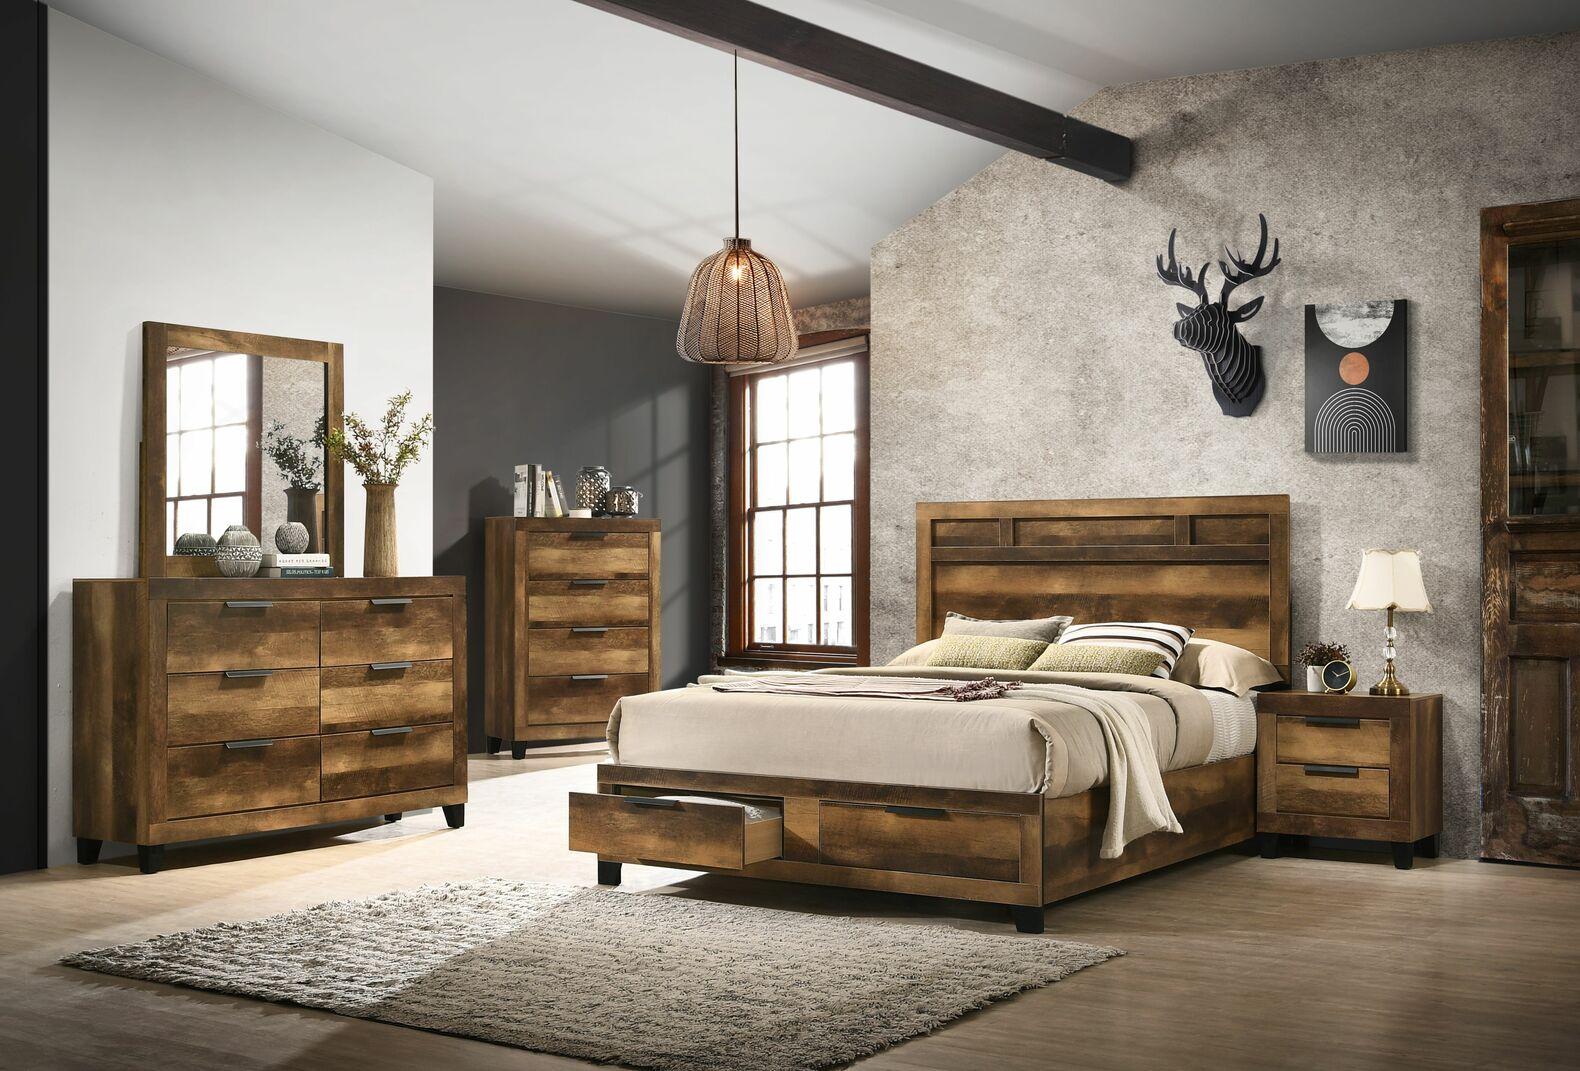 Rustic Bedroom Set Morales 28590Q-3pcs in Rustic Brown 